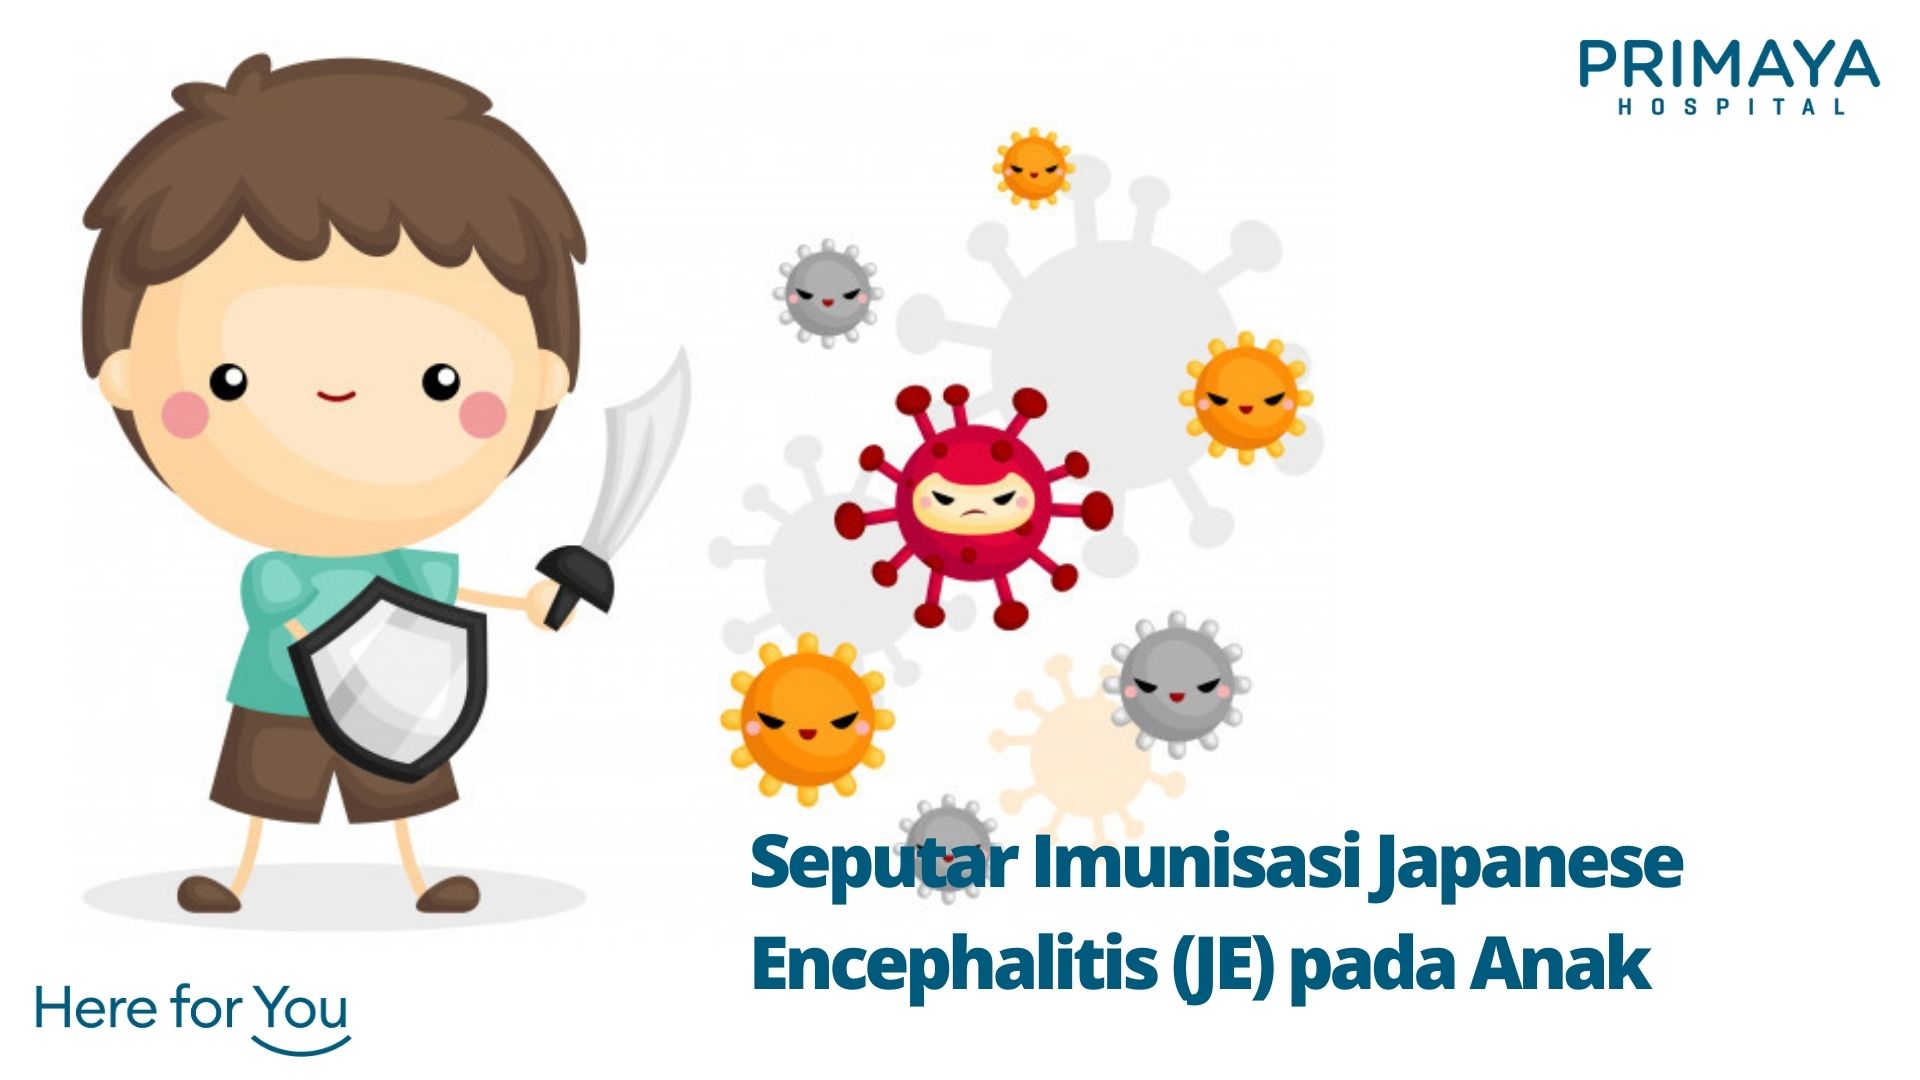 Seputar Imunisasi Japanese Encephalitis (JE) pada Anak